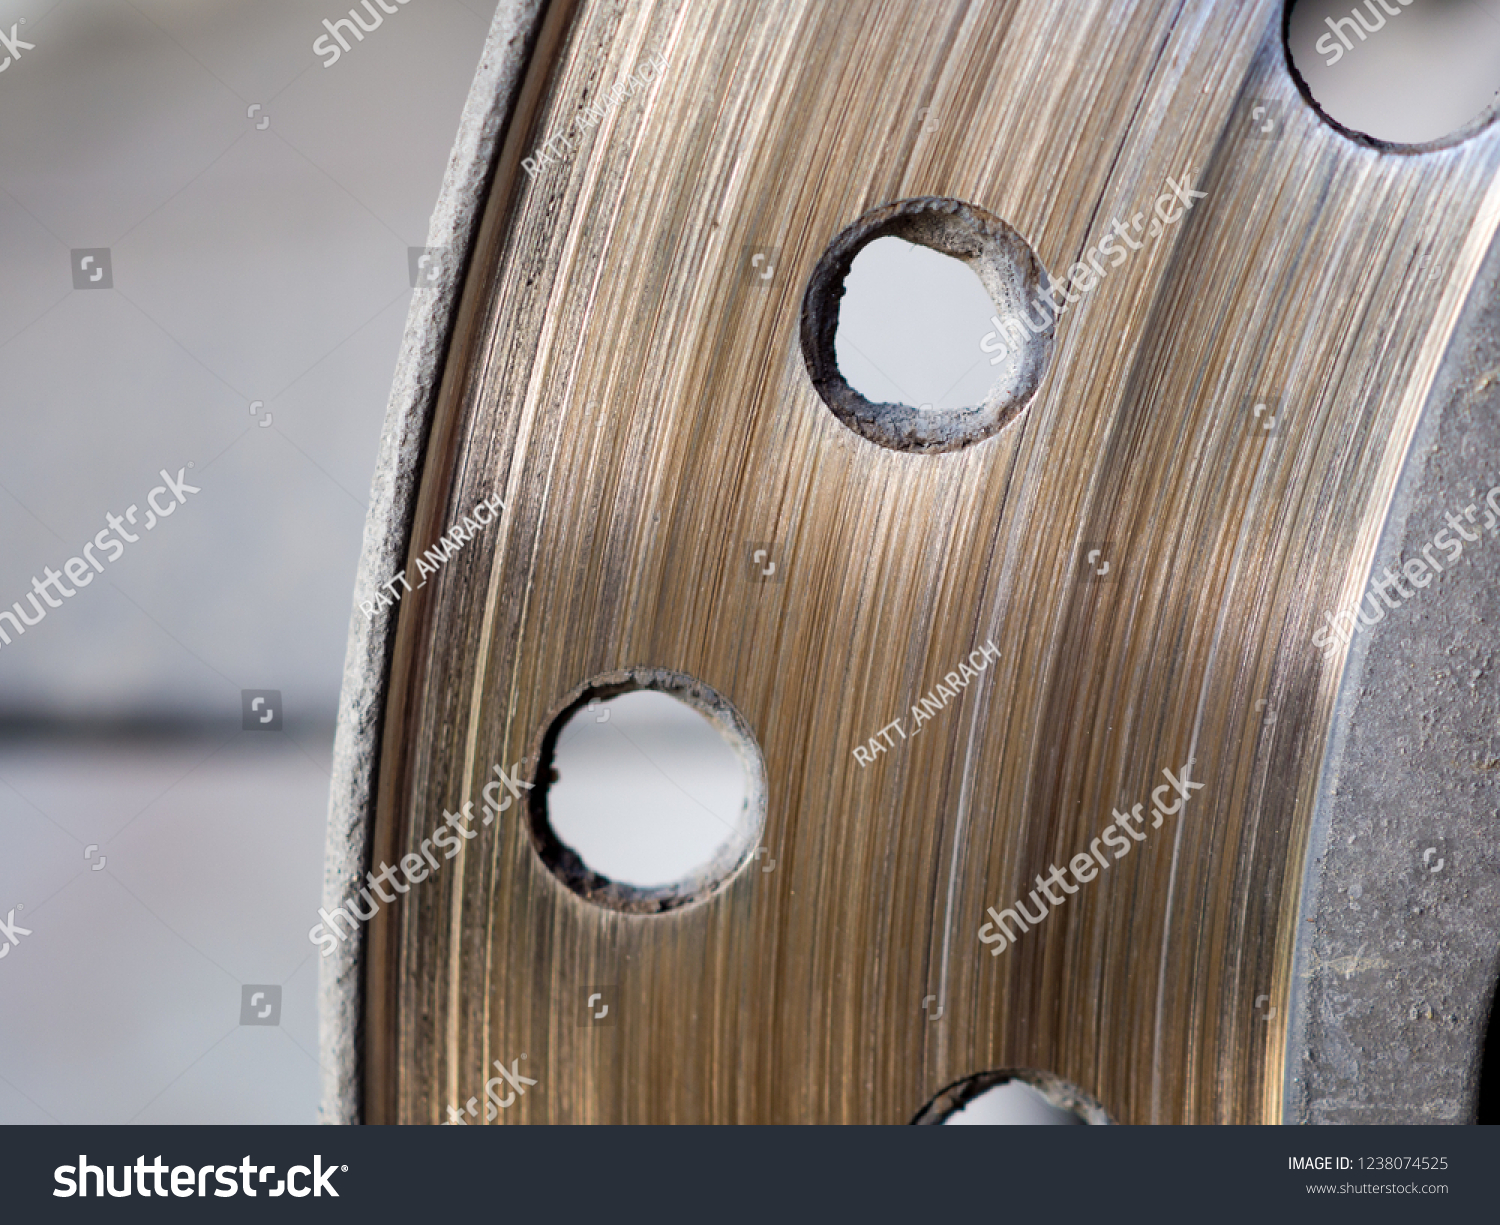 Motorbike engine disk brake. Close up of a motorcycle disk brake. #1238074525